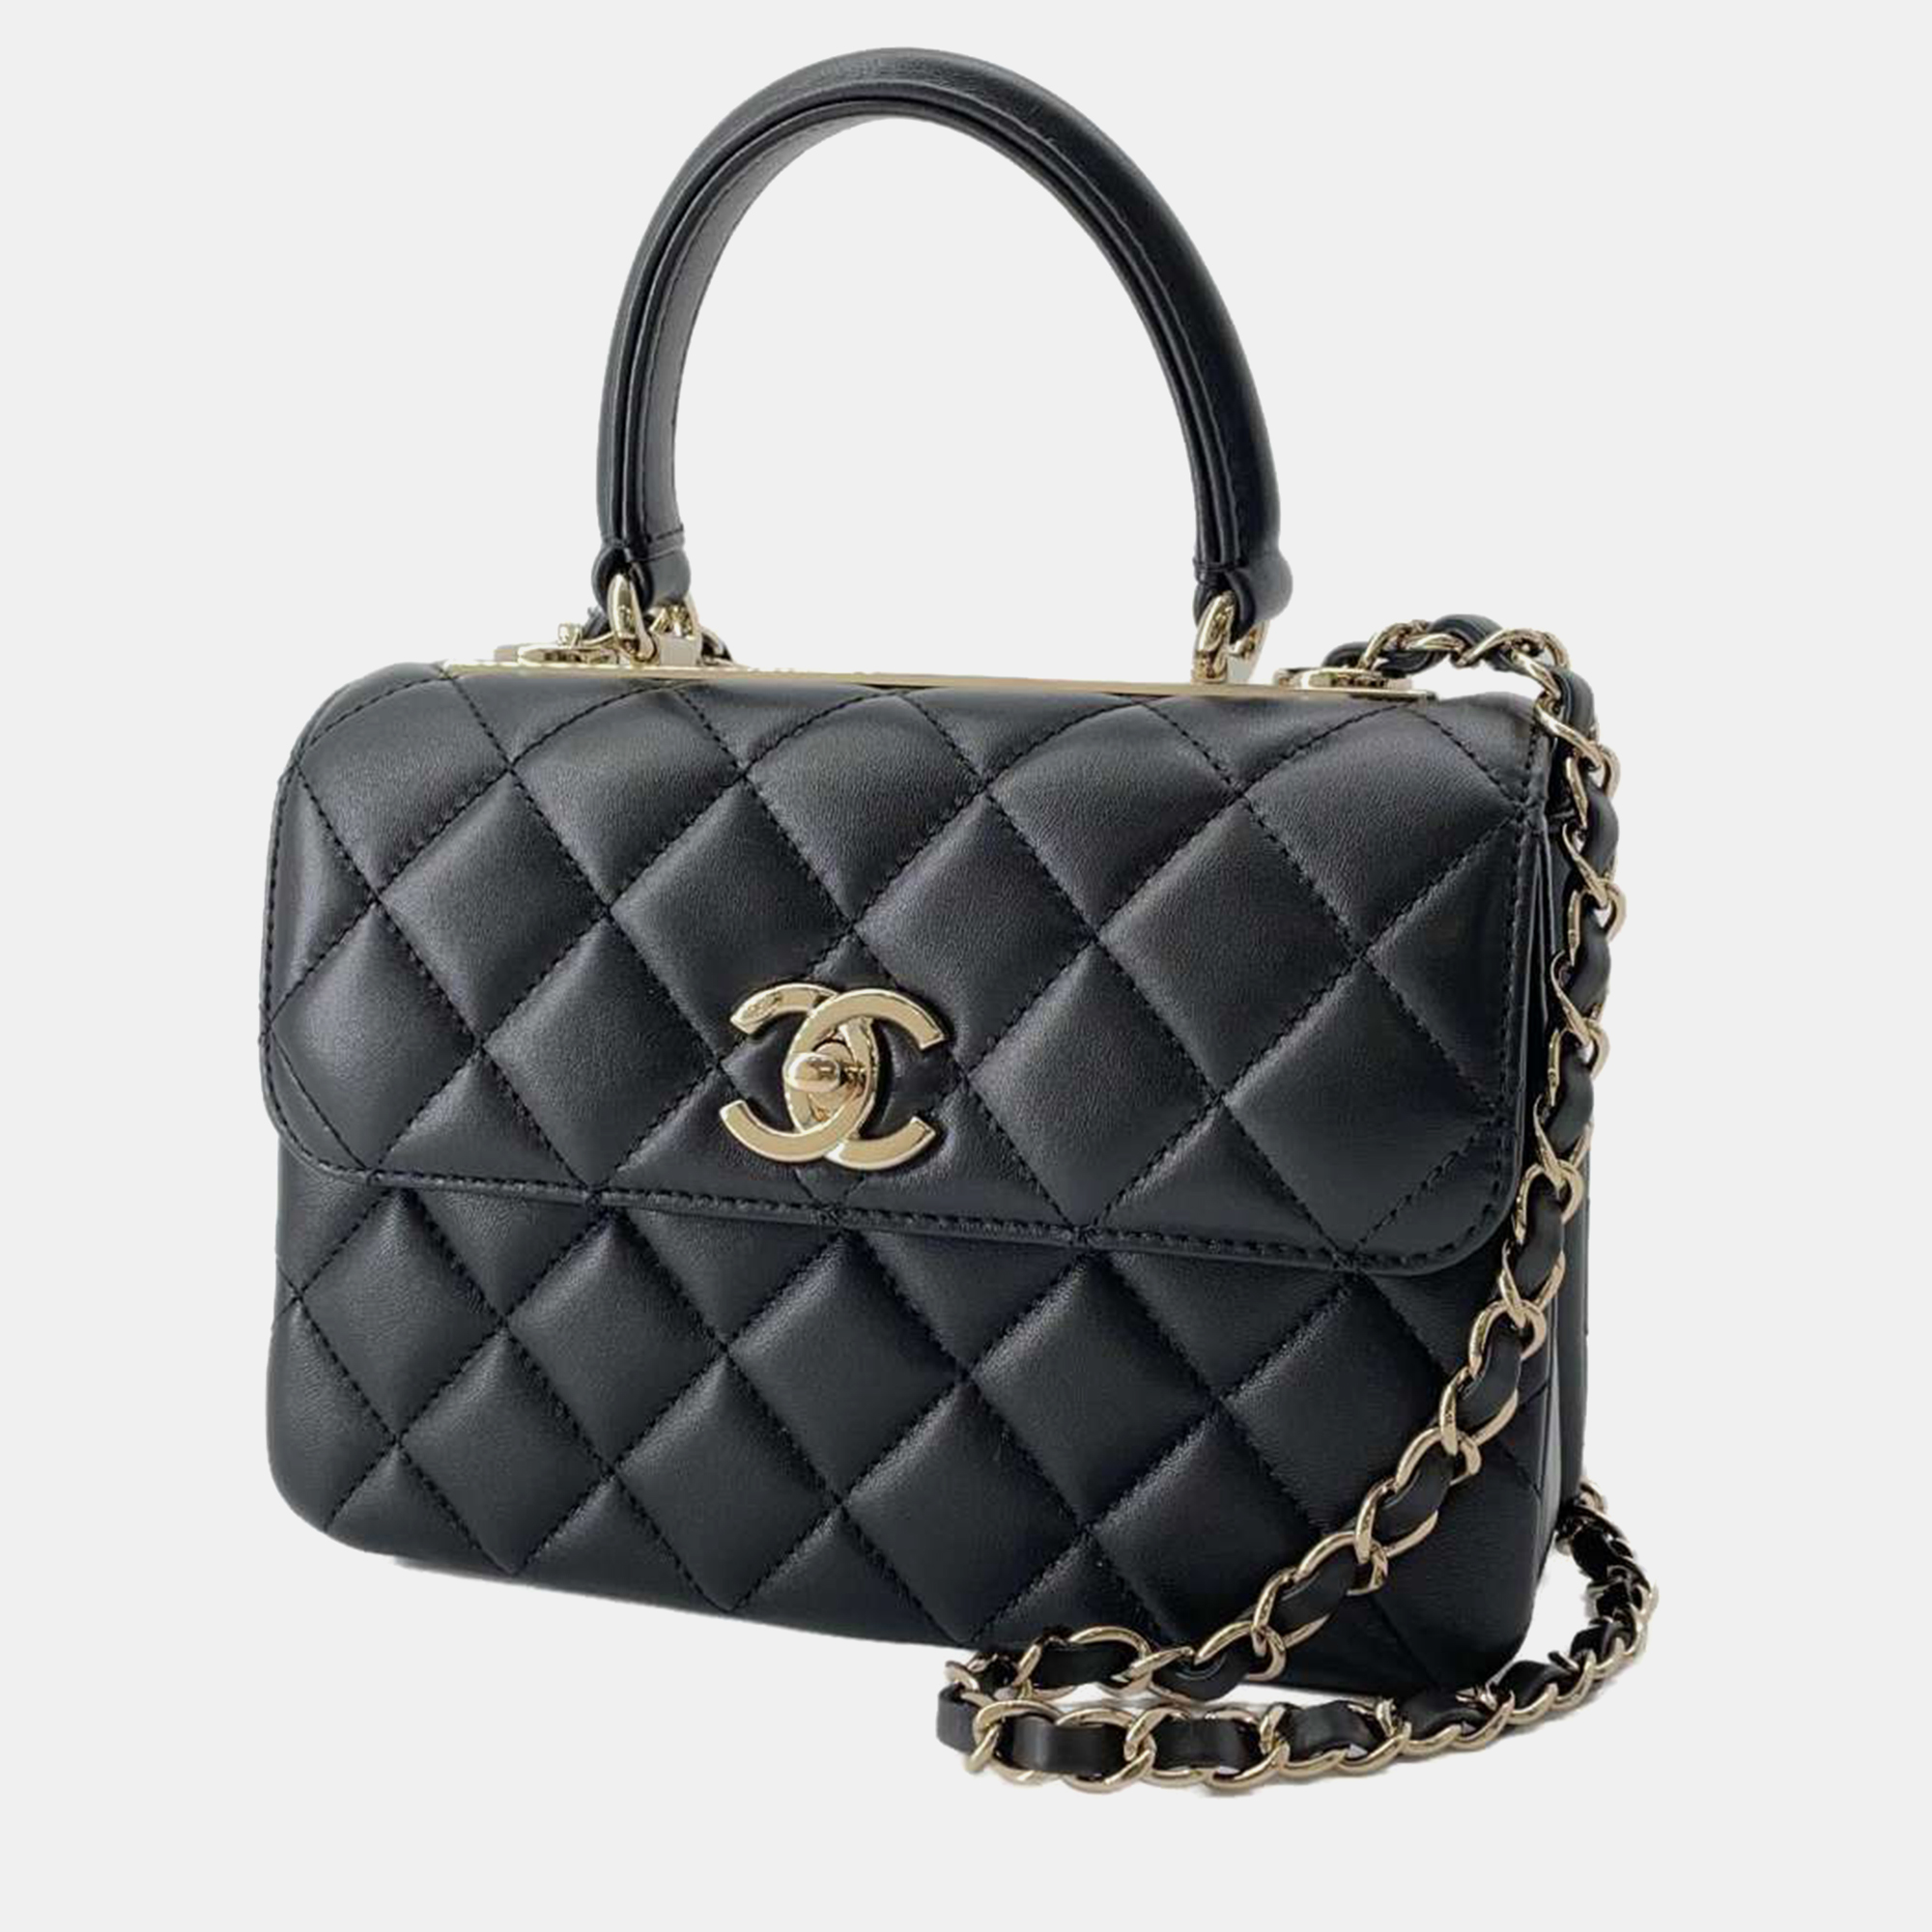 Chanel black lambskin classic small trendy cc flap bag